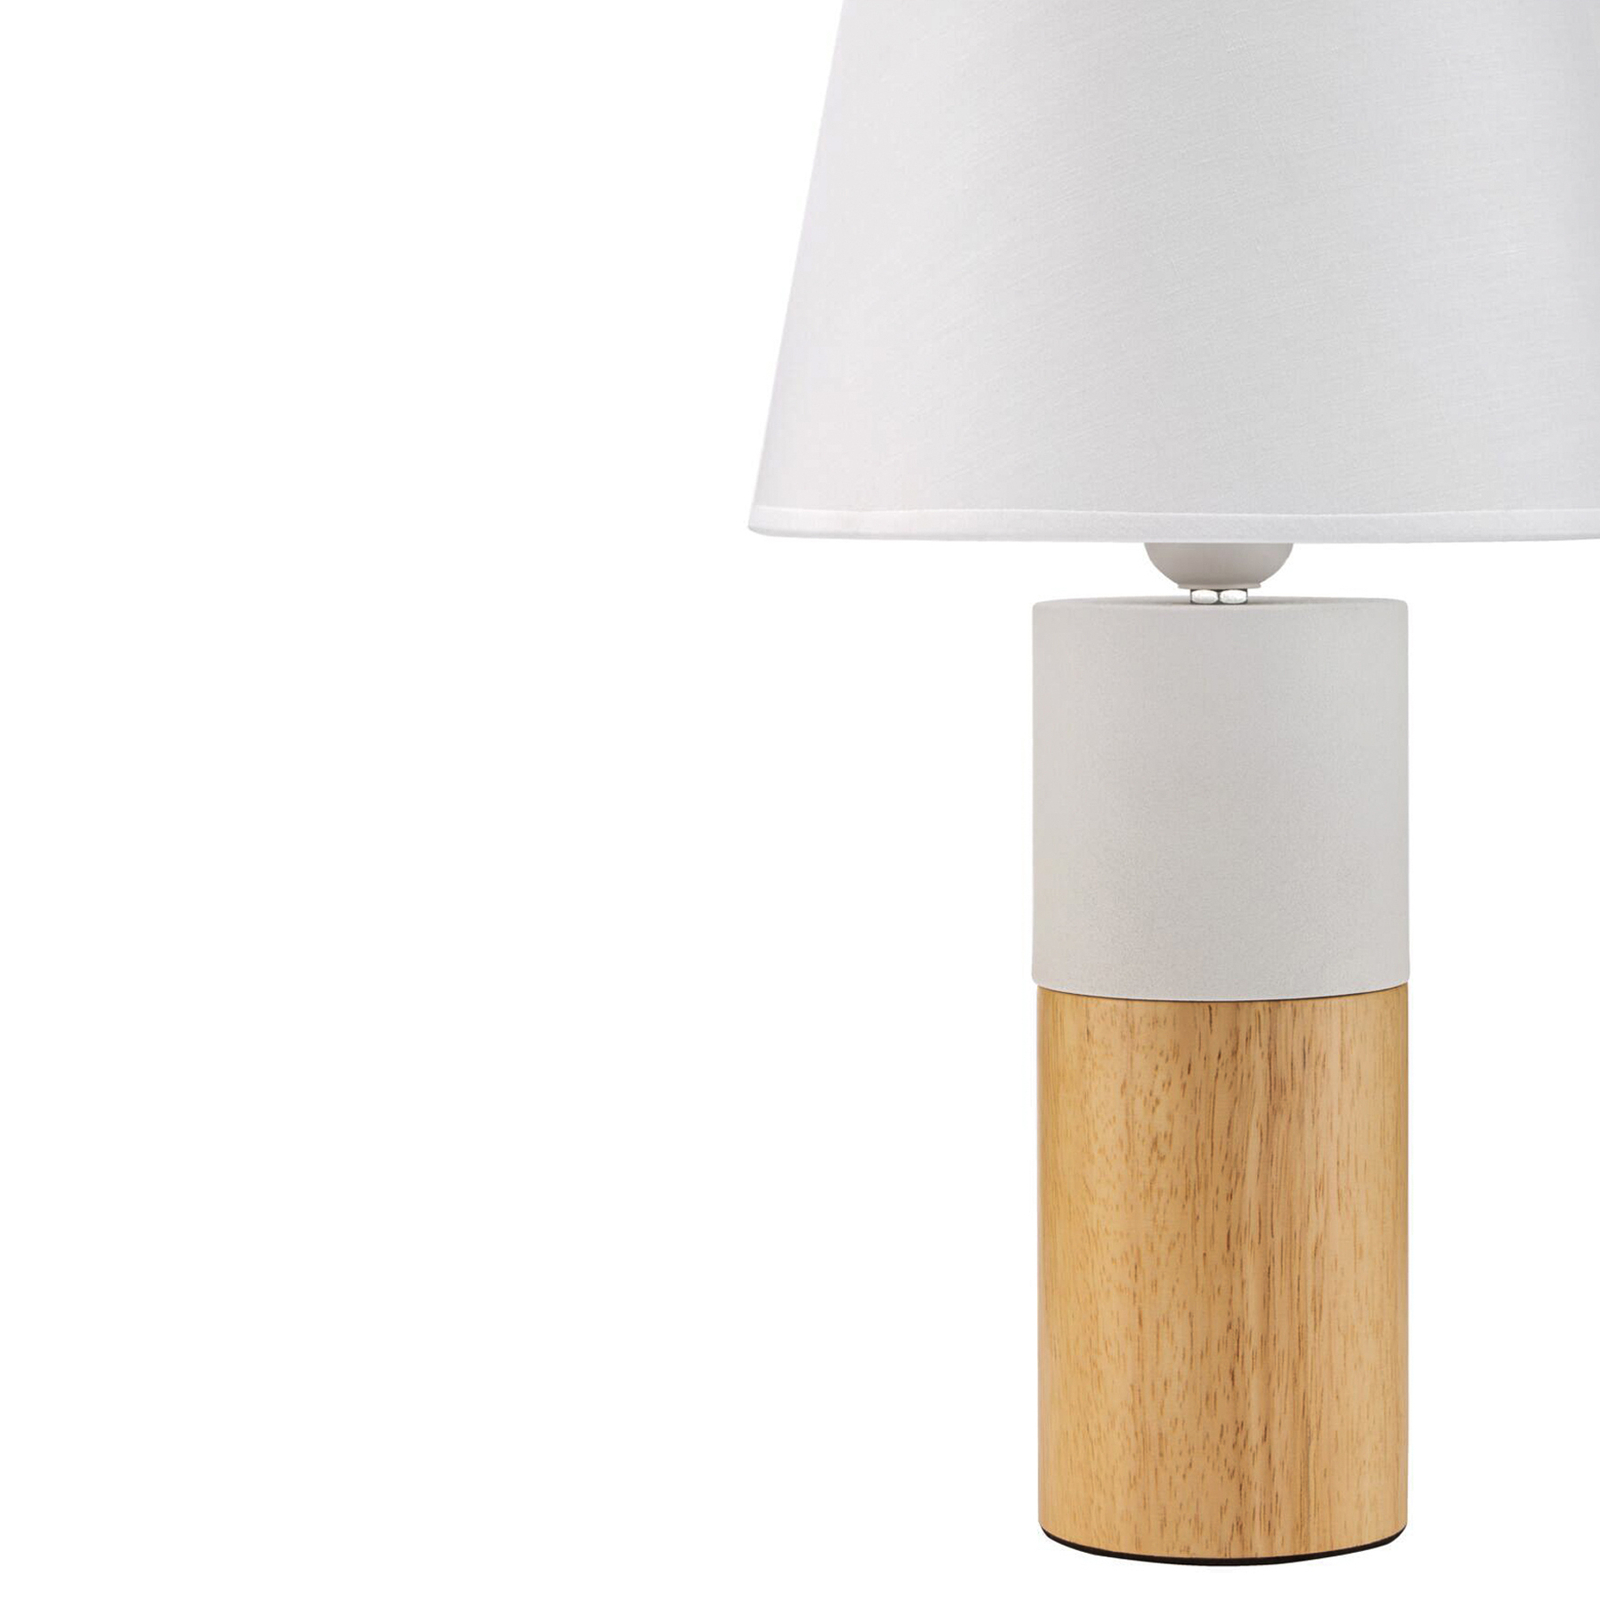 Pauleen Woody Elegance tafellamp, hout/textiel